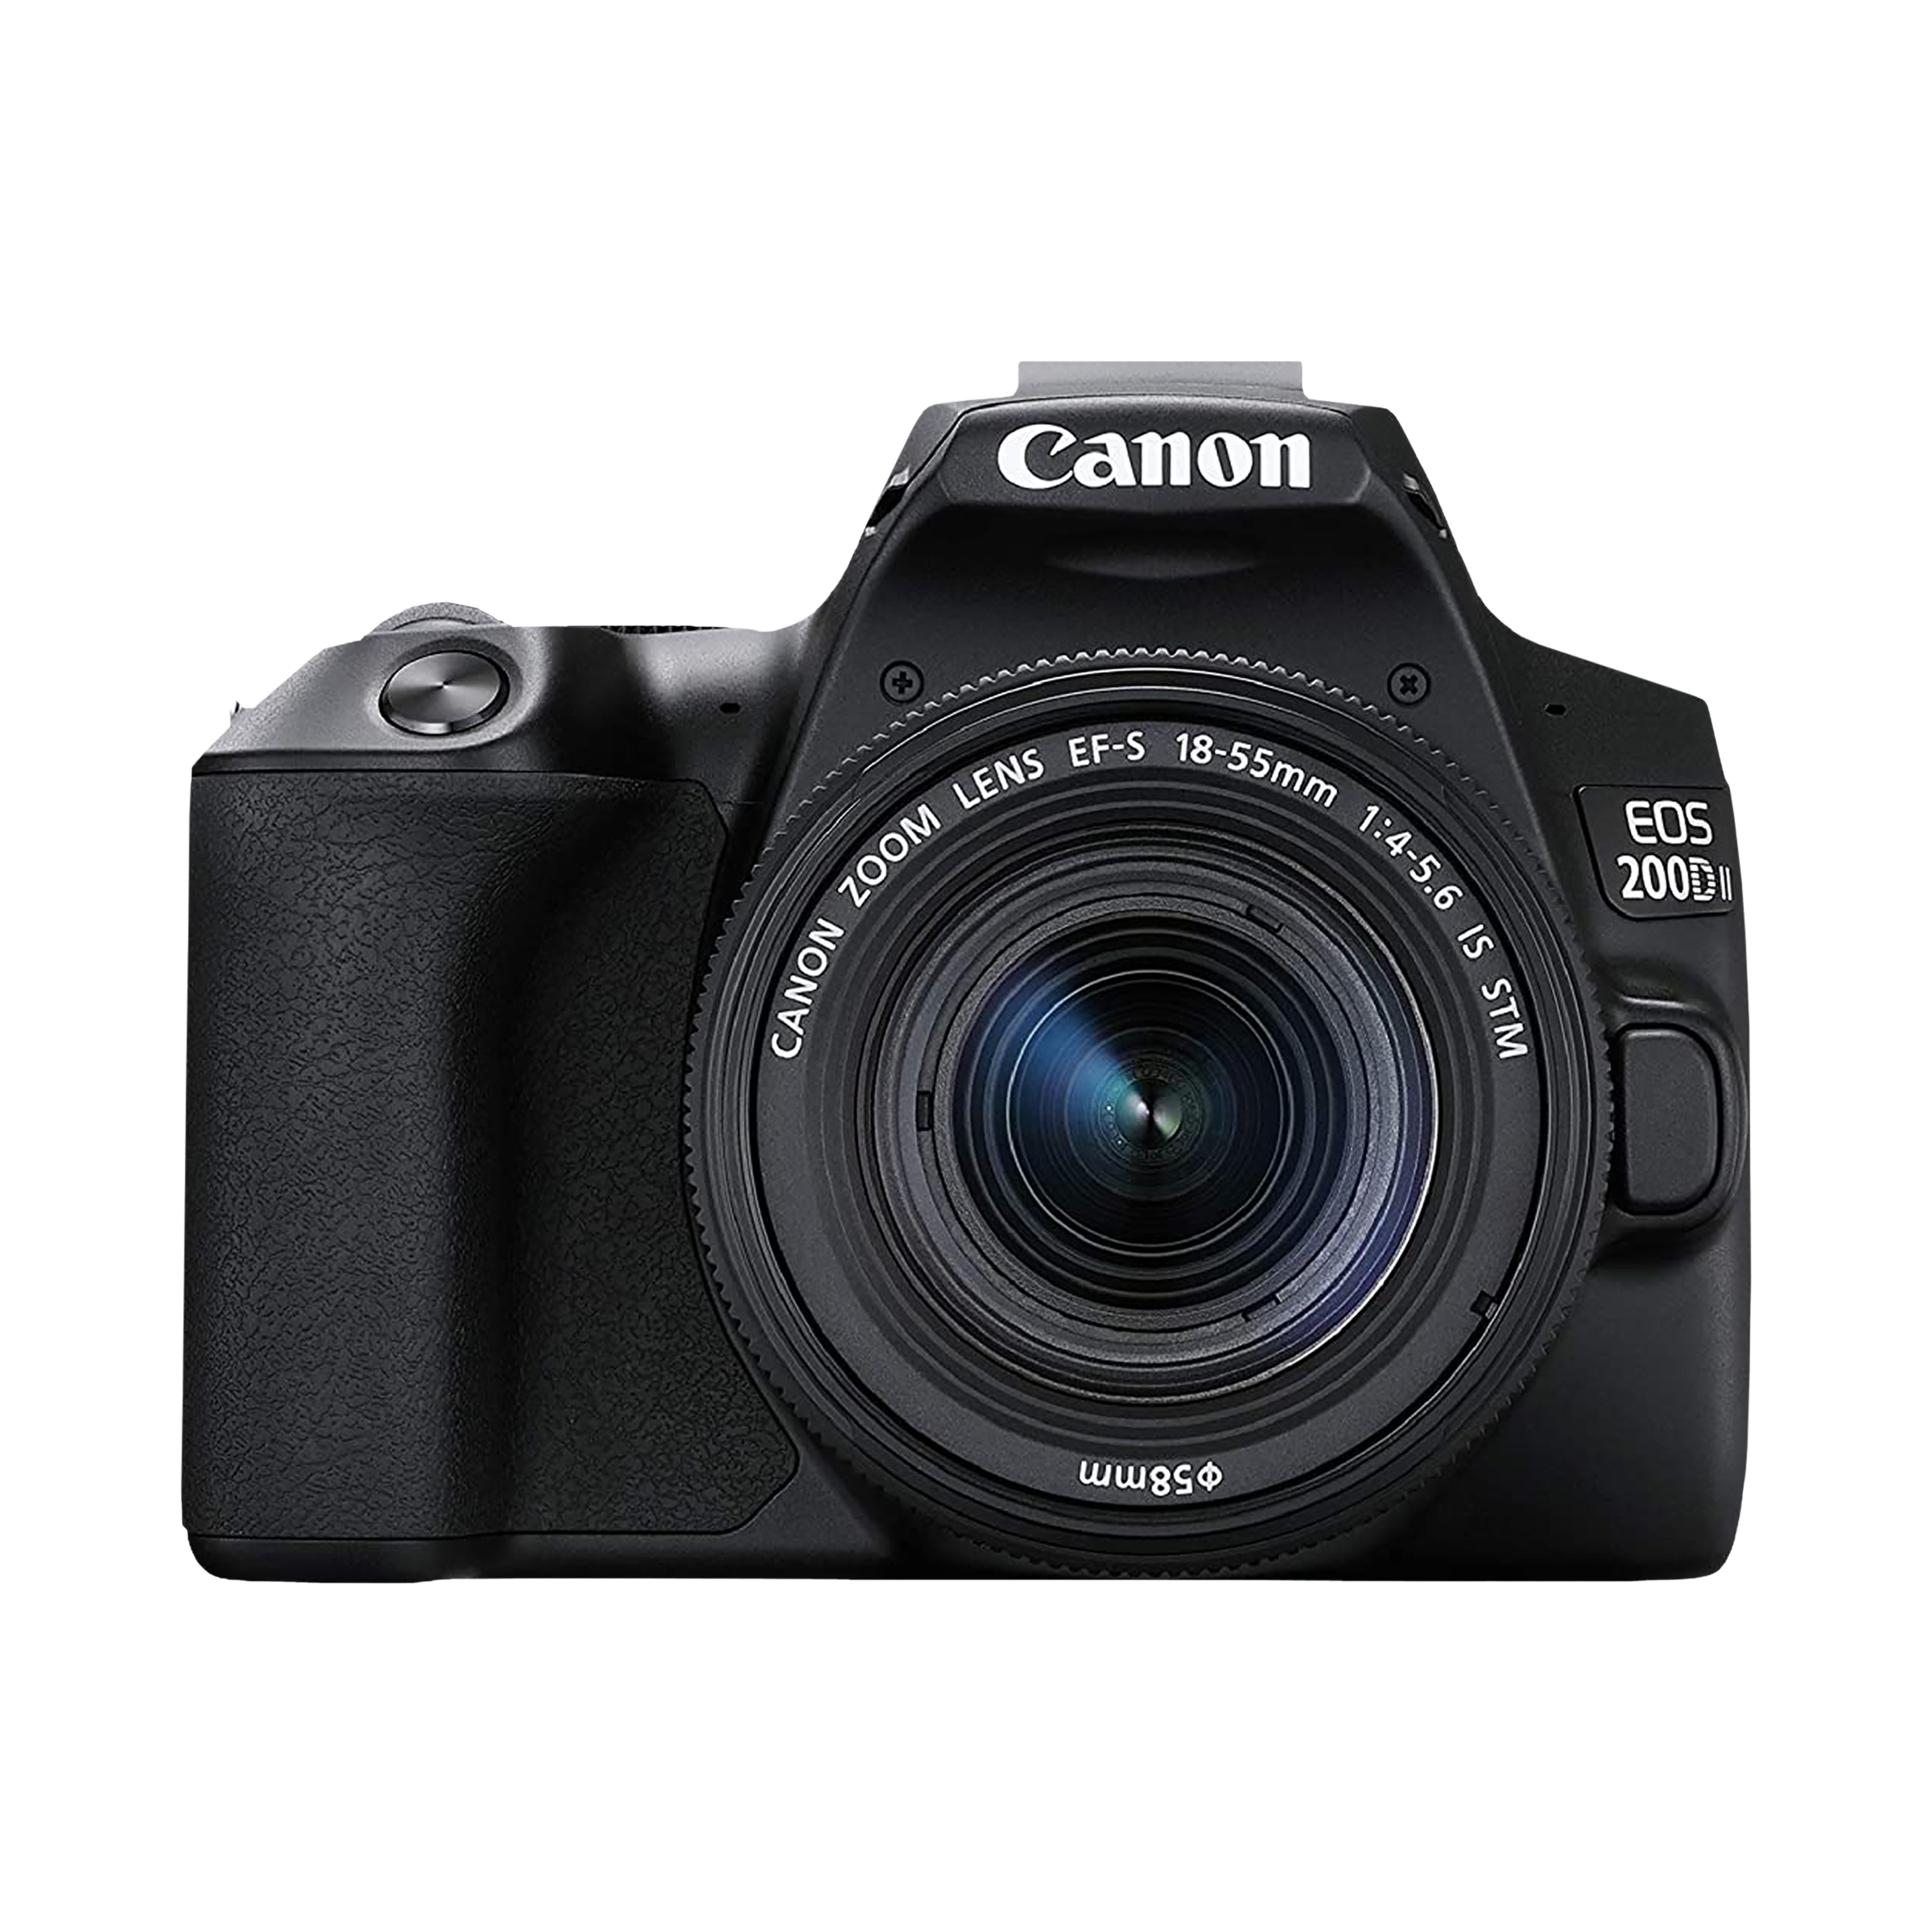 Canon EOS 200D II 24.1 MP DSLR Camera (18 - 55 mm lens, 22.3 x 14.9 mm, Optical Image Stabilization)